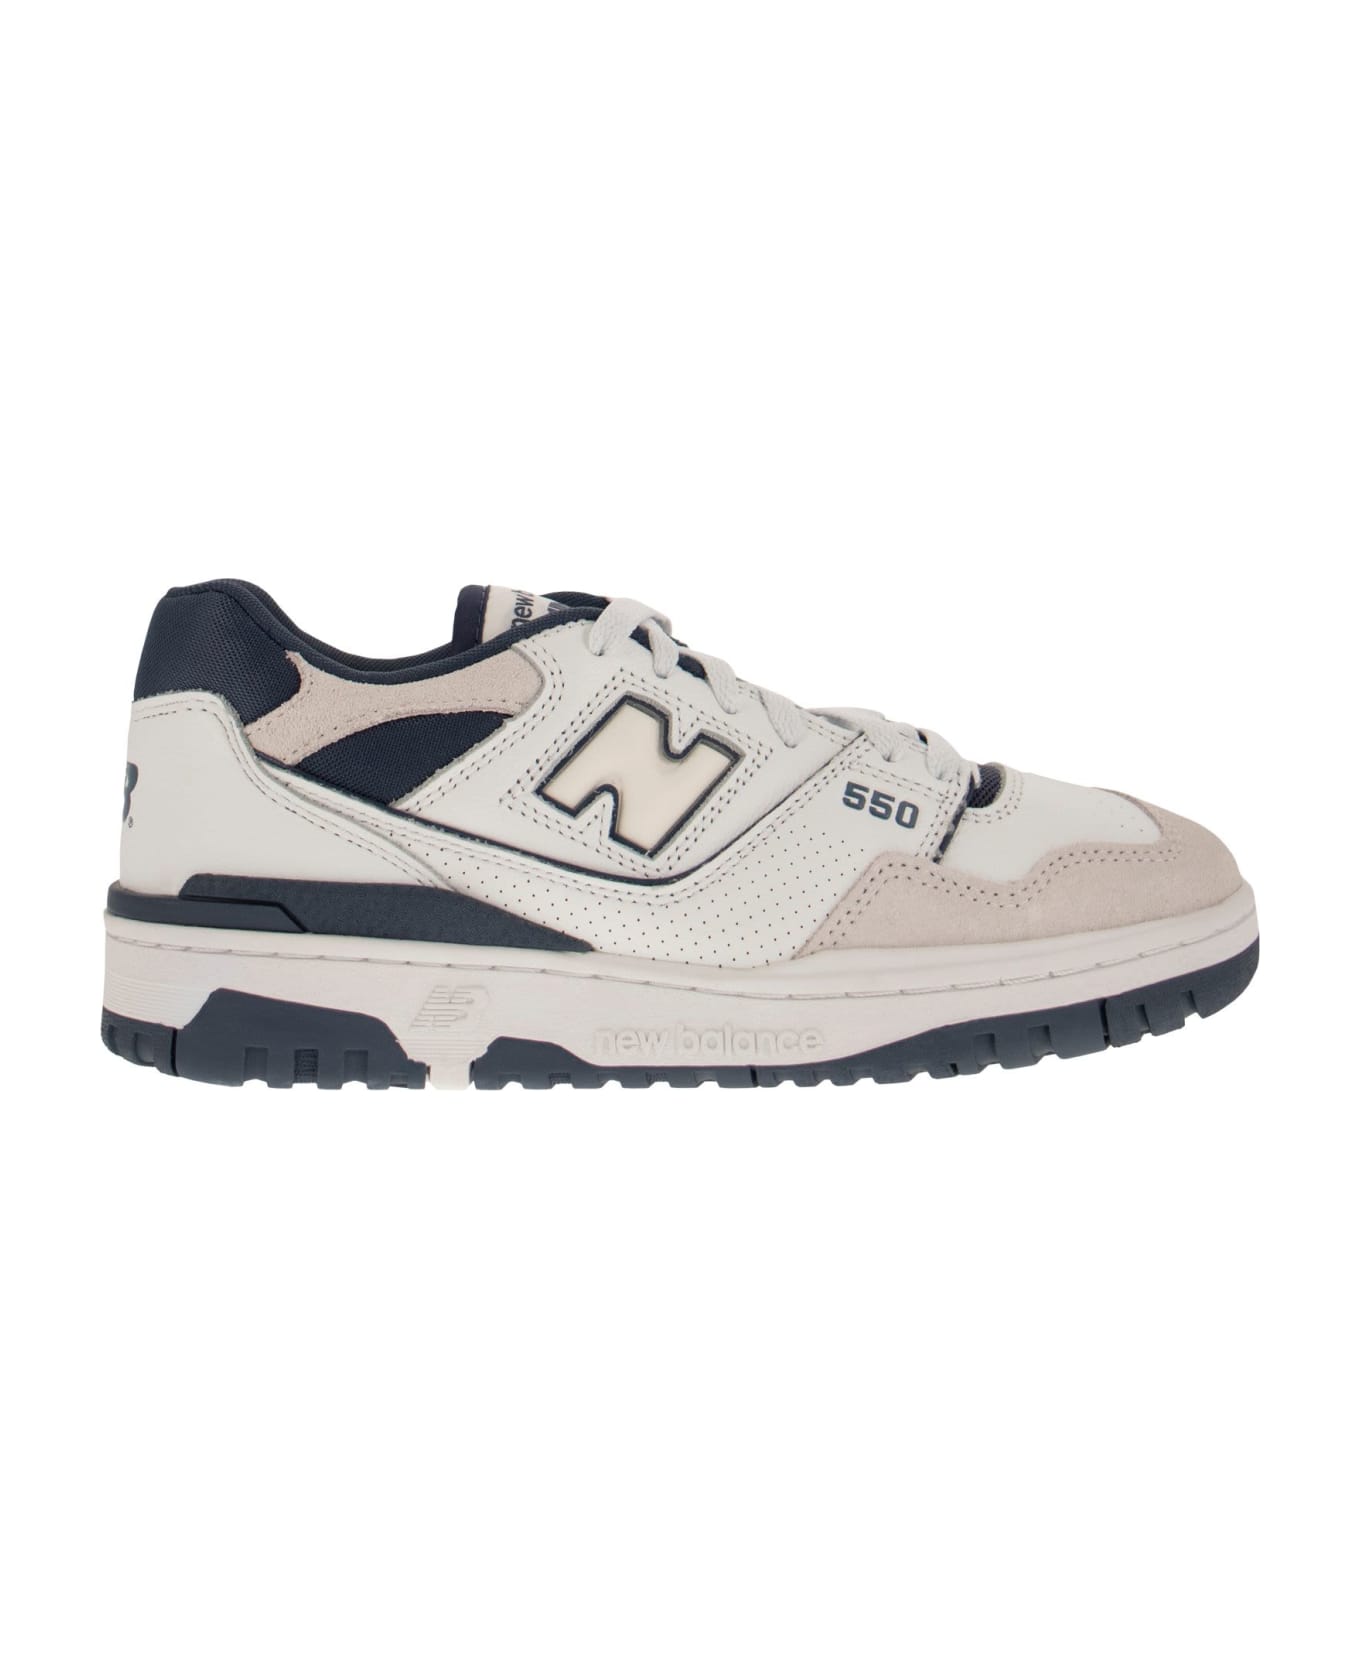 New Balance Bb550 - Sneakers - White/blue スニーカー